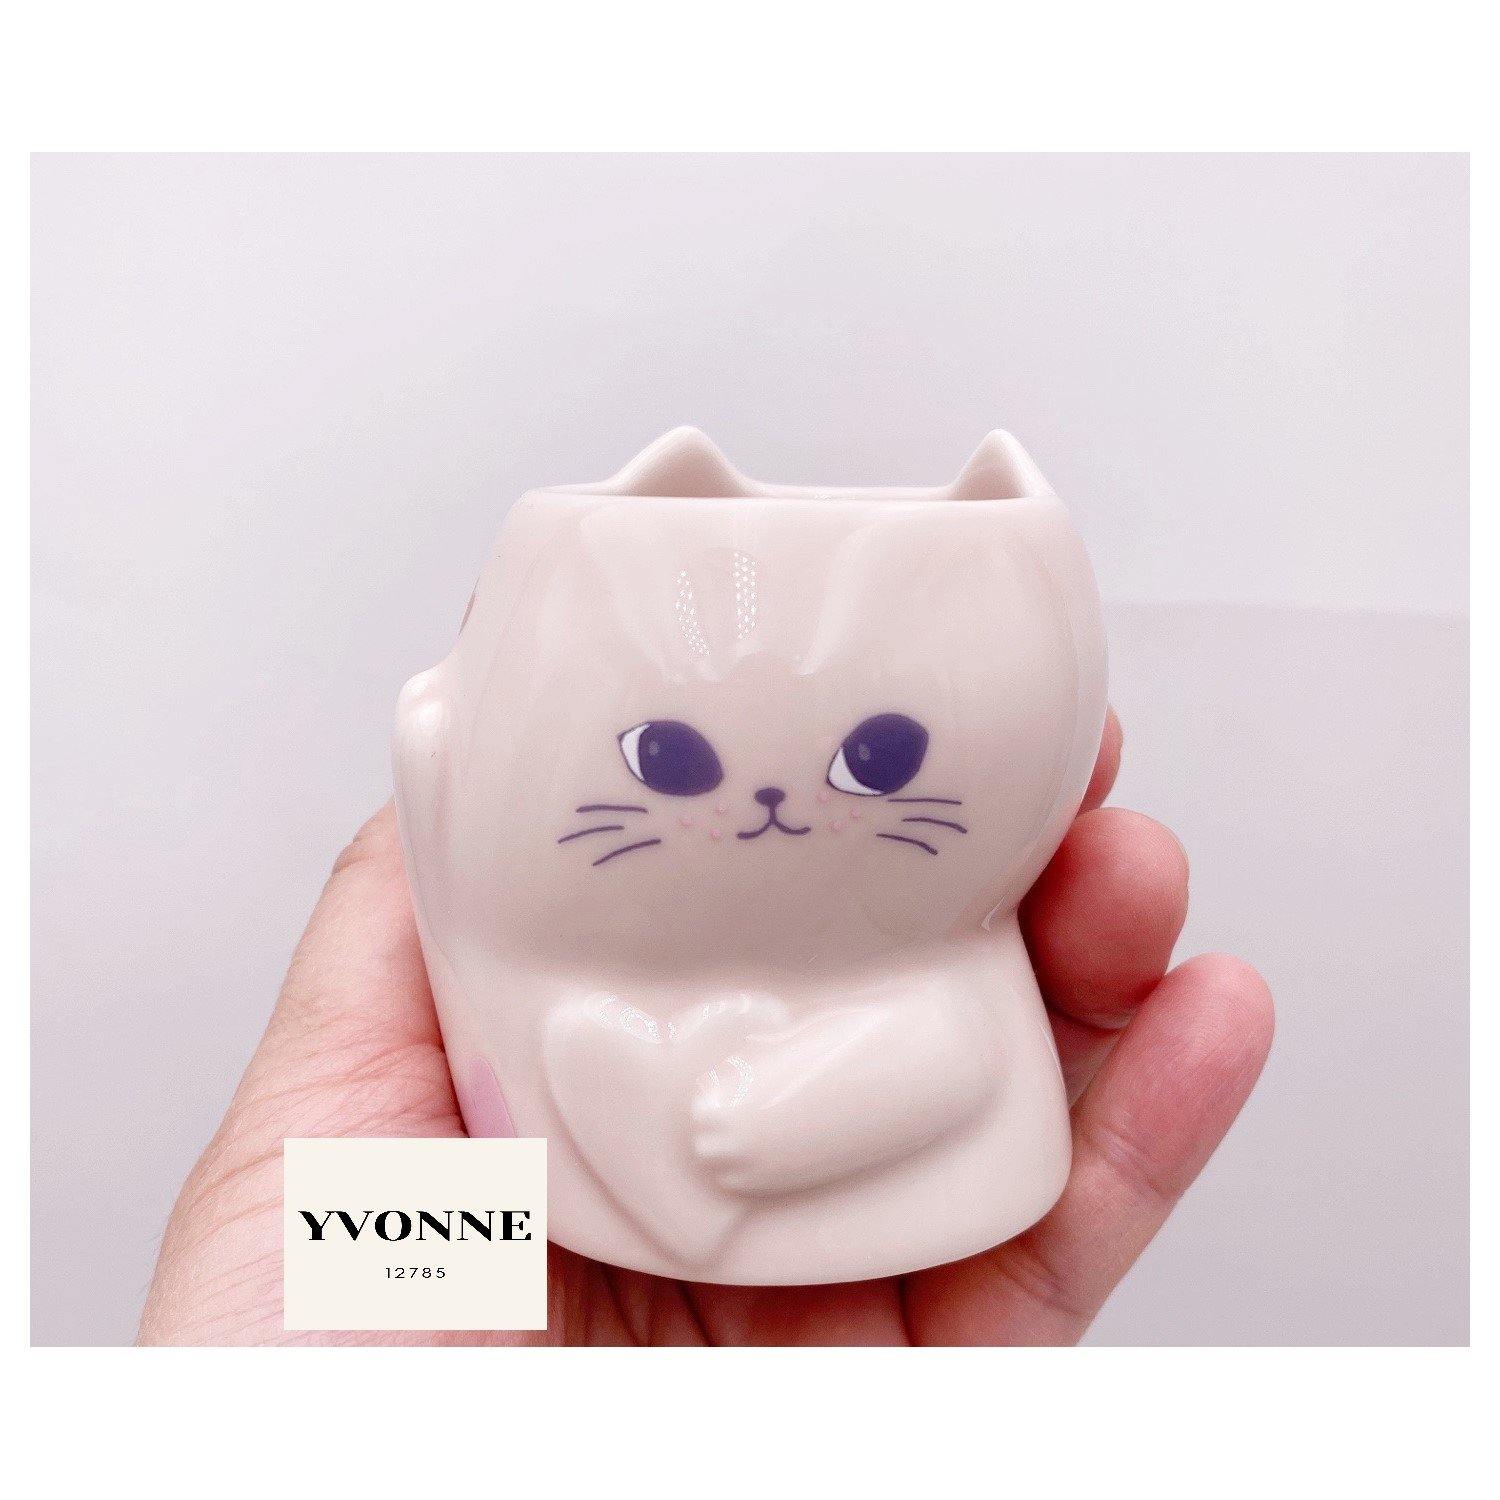 Starbucks 2020 Pink Secret Love Cat Tasting Mug 3oz Small Cup - Yvonne12785